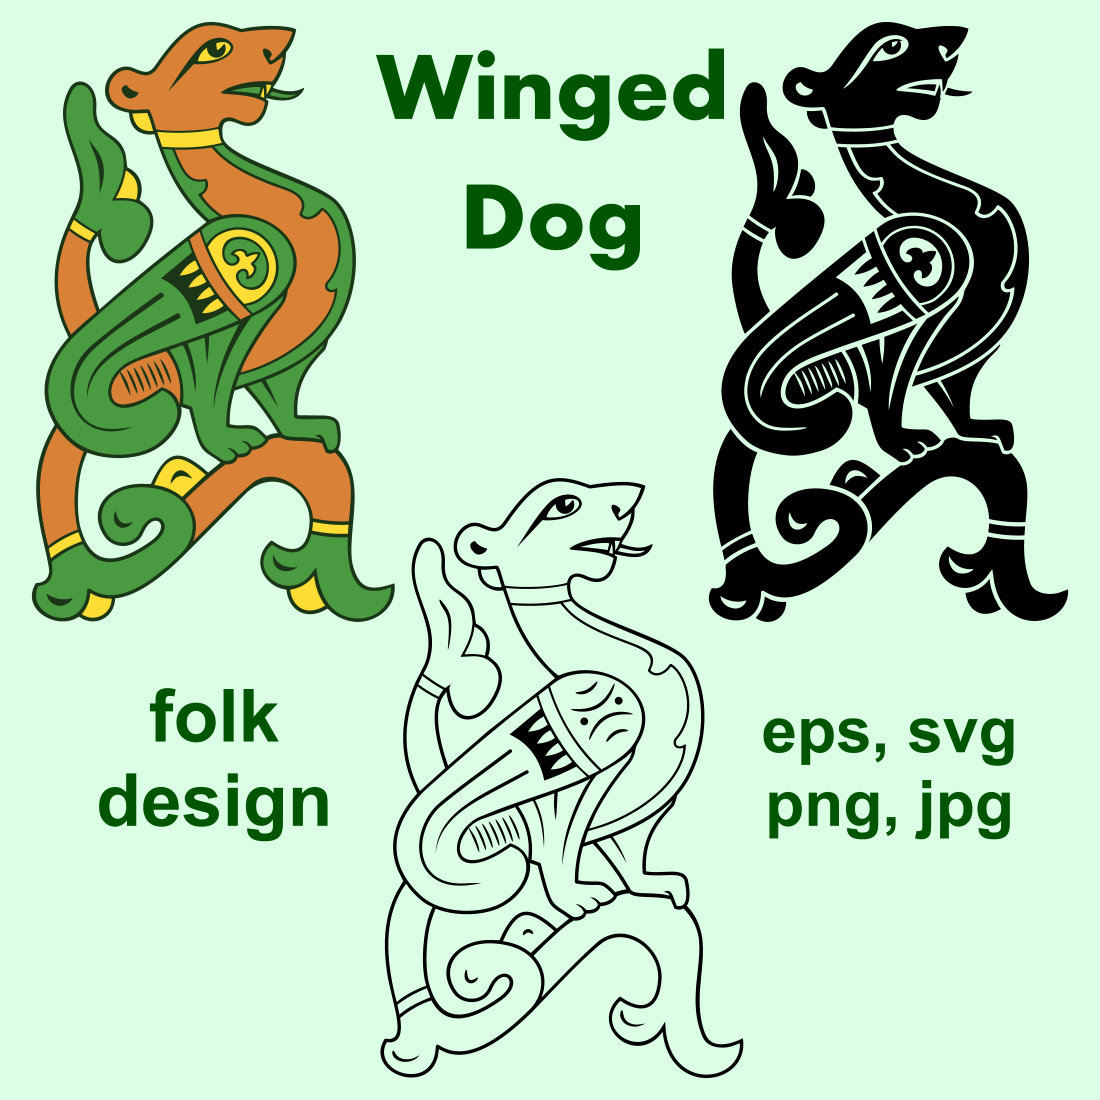 Winged Dog Folk Design cover image.